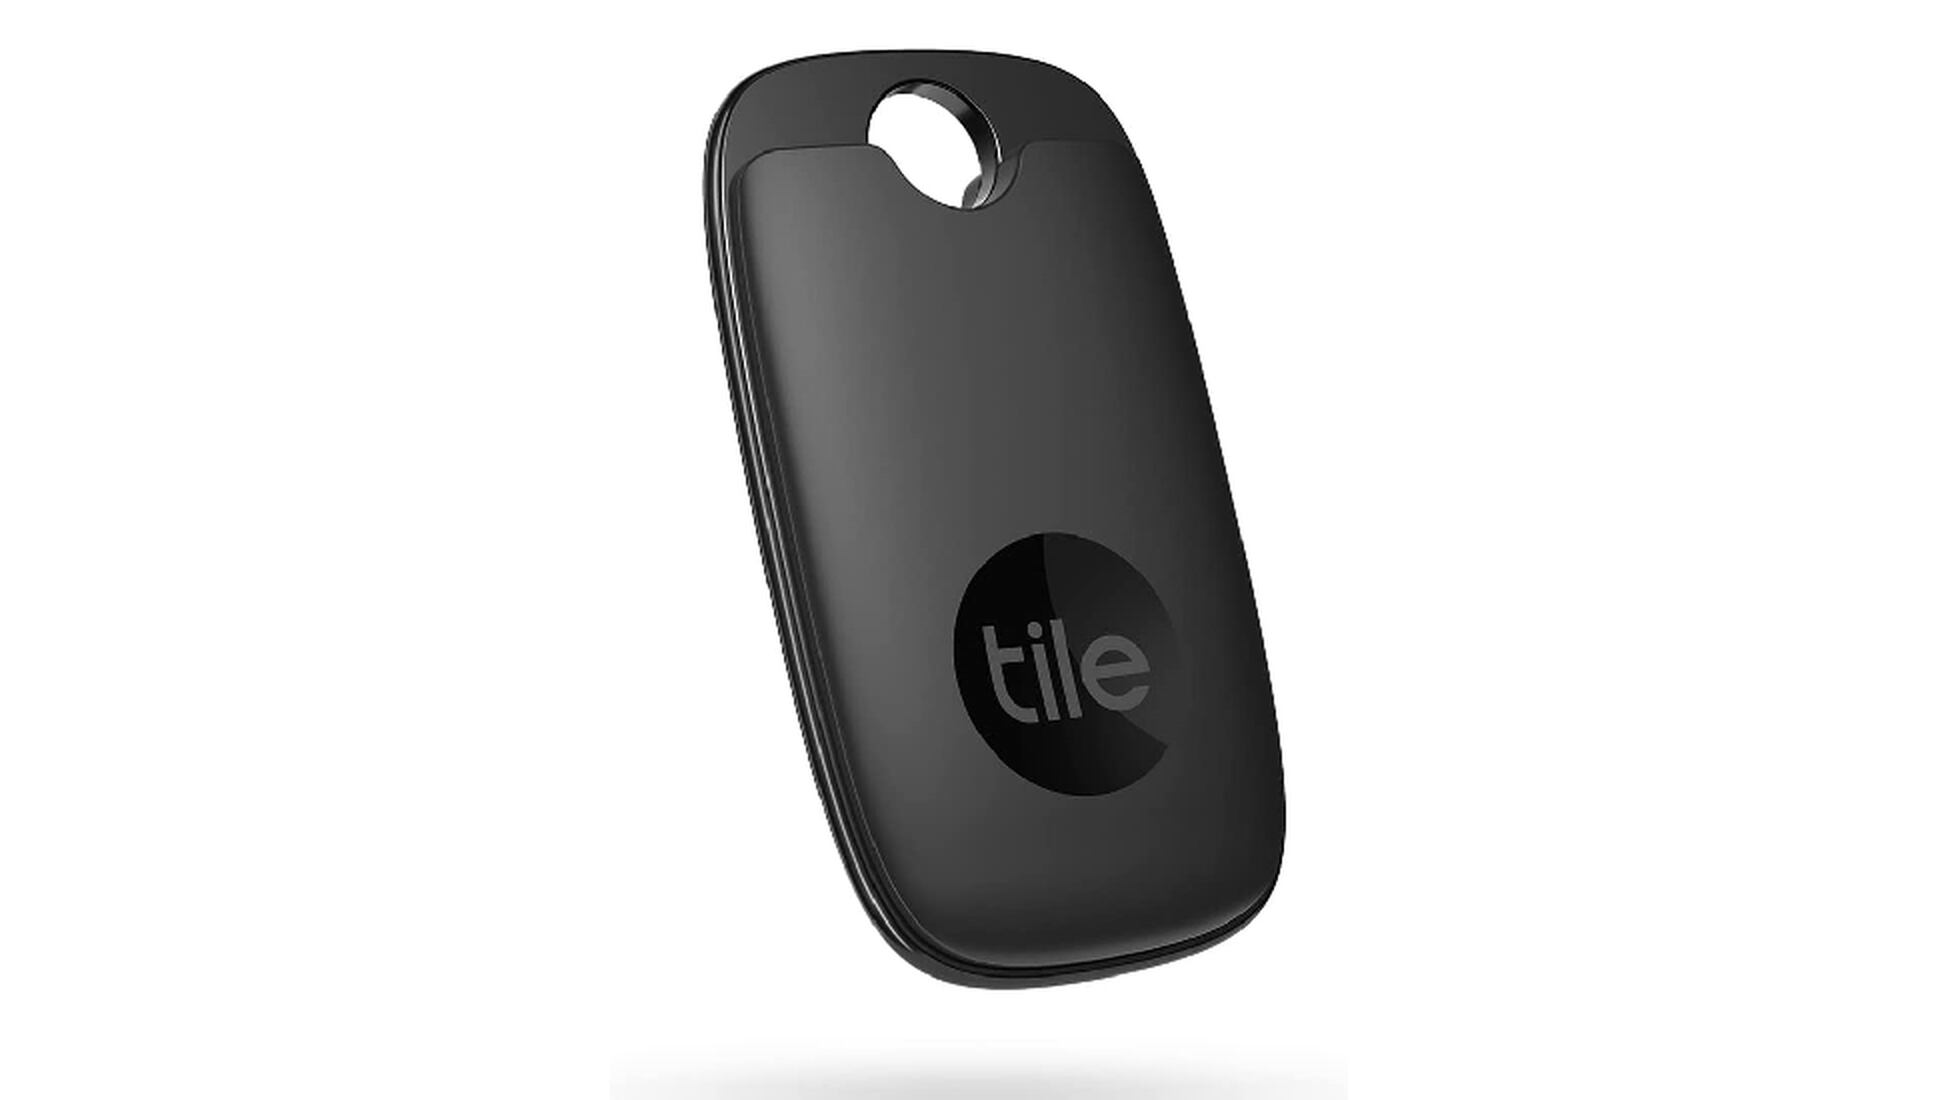 Localizador de llaves con sonido – Etiqueta de dispositivo rastreador  Bluetooth para artículos perdidos, bolsas, cartera o cámara – Pequeño